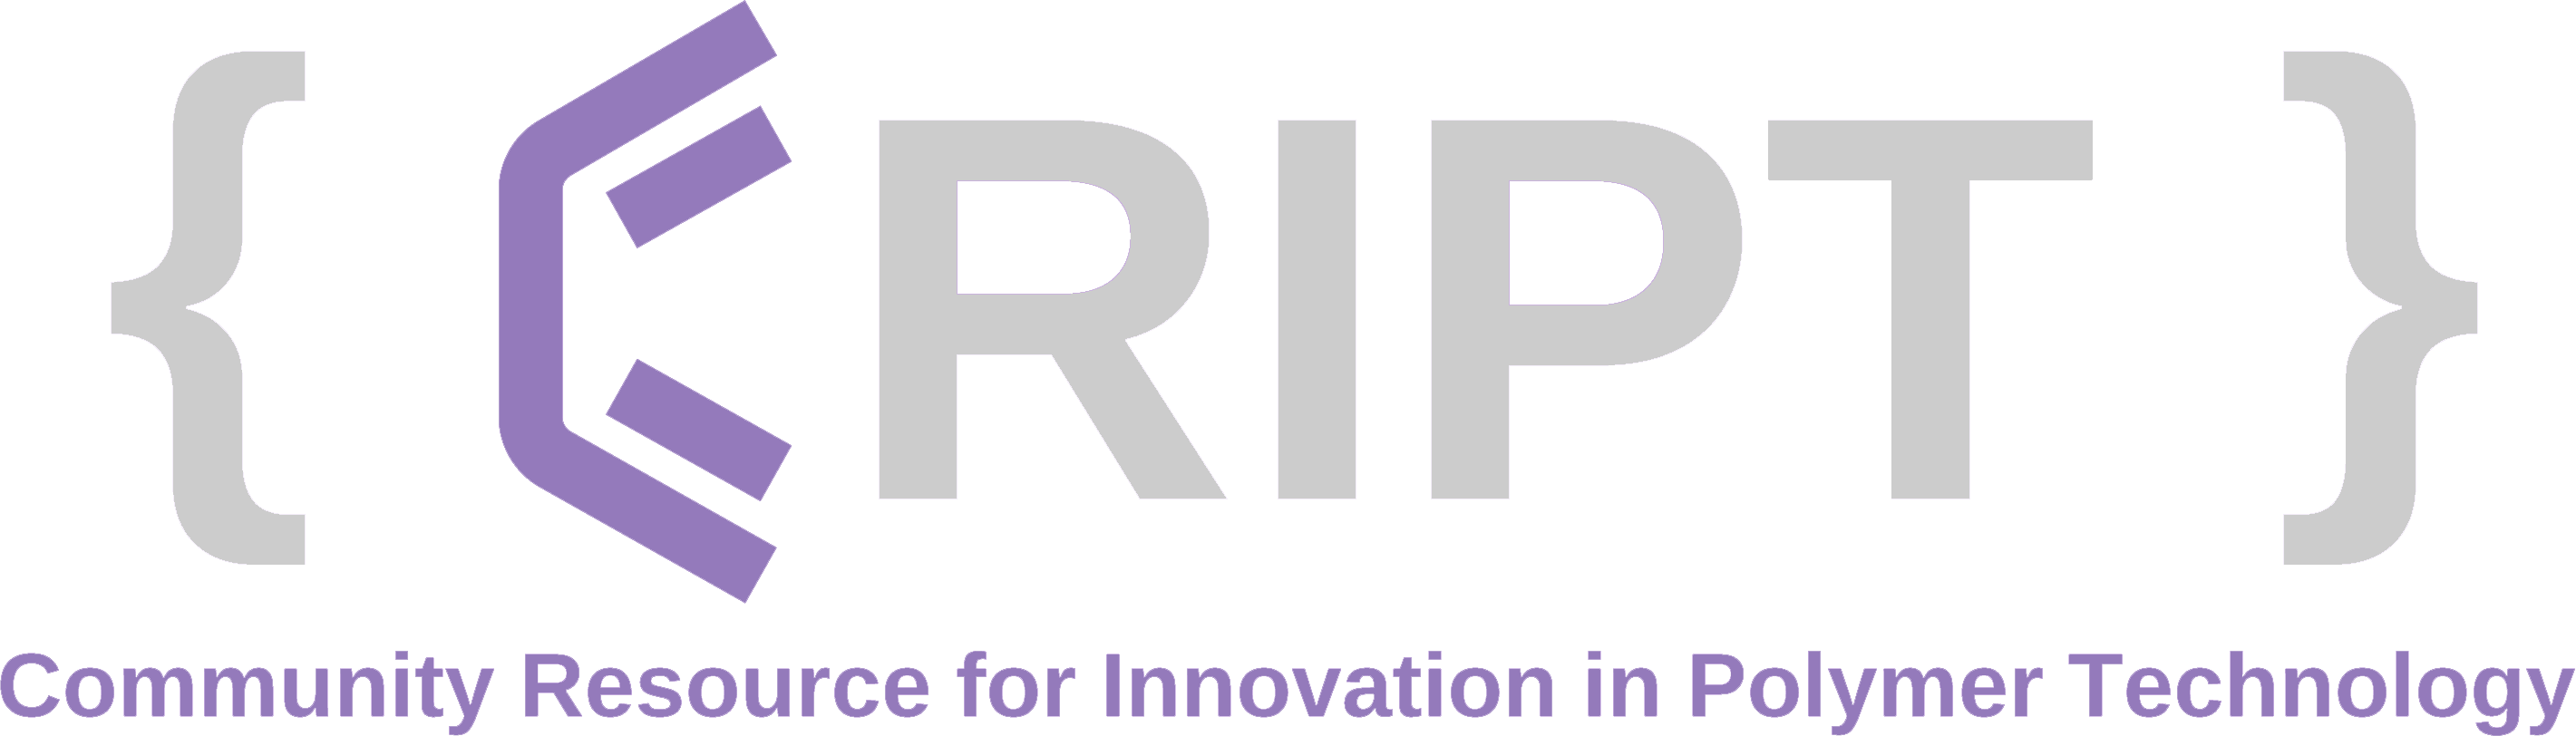 CRIPT Logo